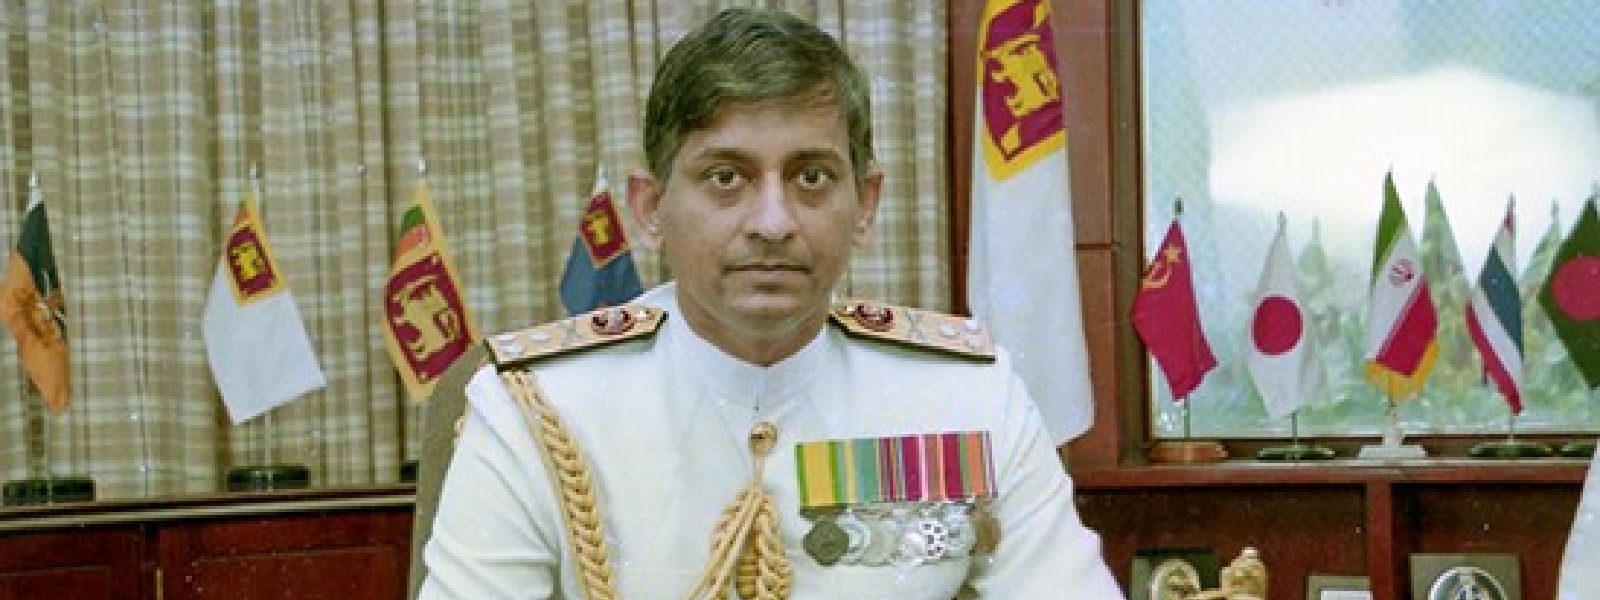 Sri Lanka’s 12th Navy Commander Admiral Samarasekera has died